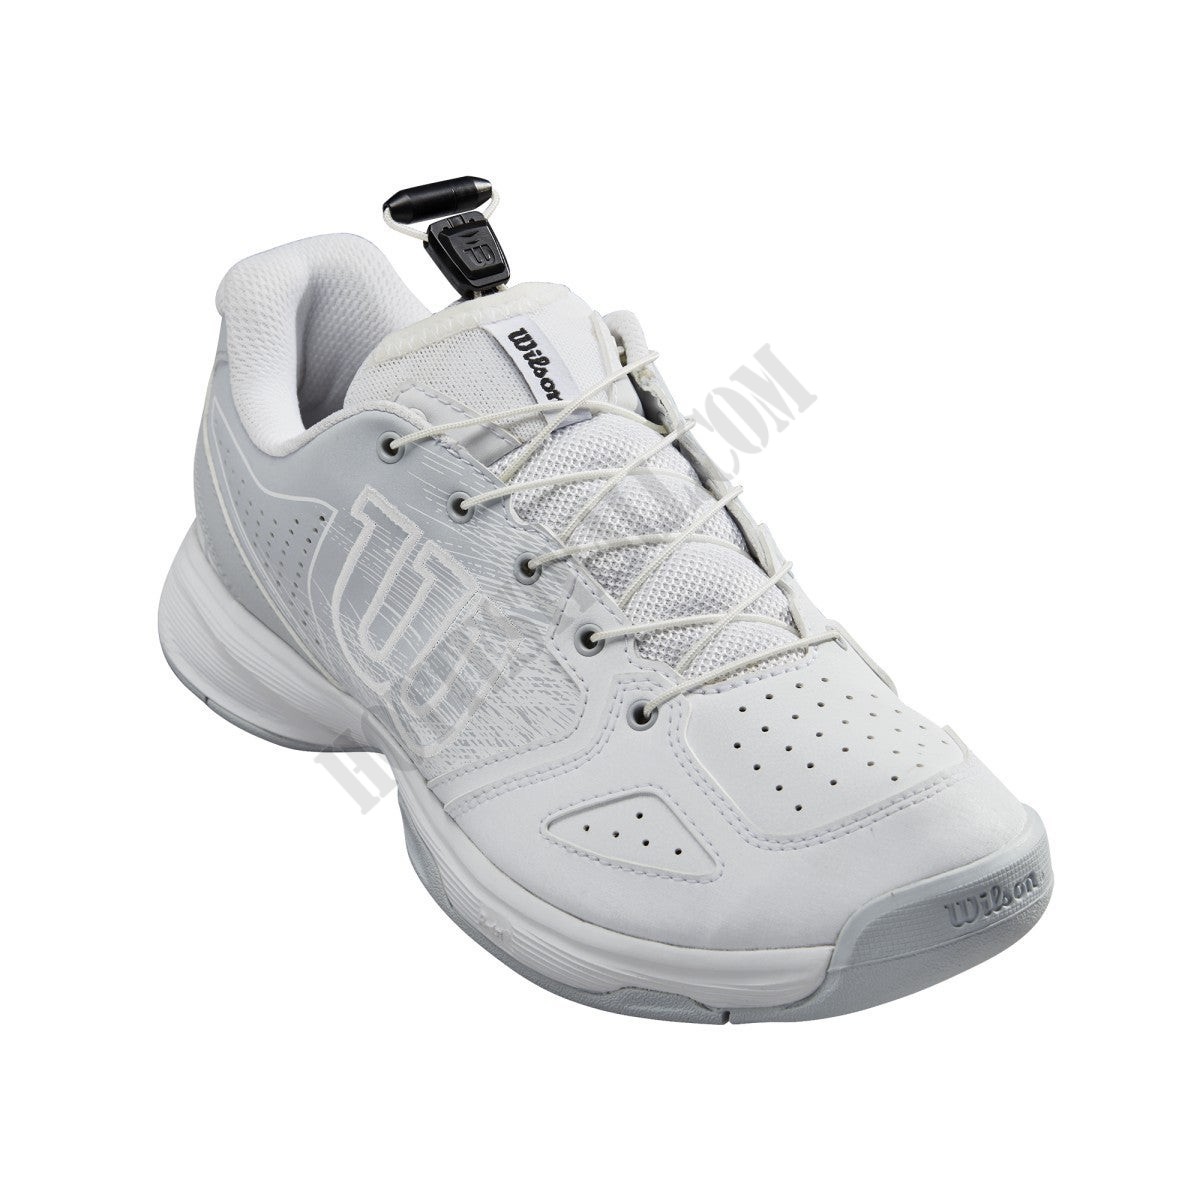 Junior's Kaos QL Tennis Shoe - Wilson Discount Store - -0